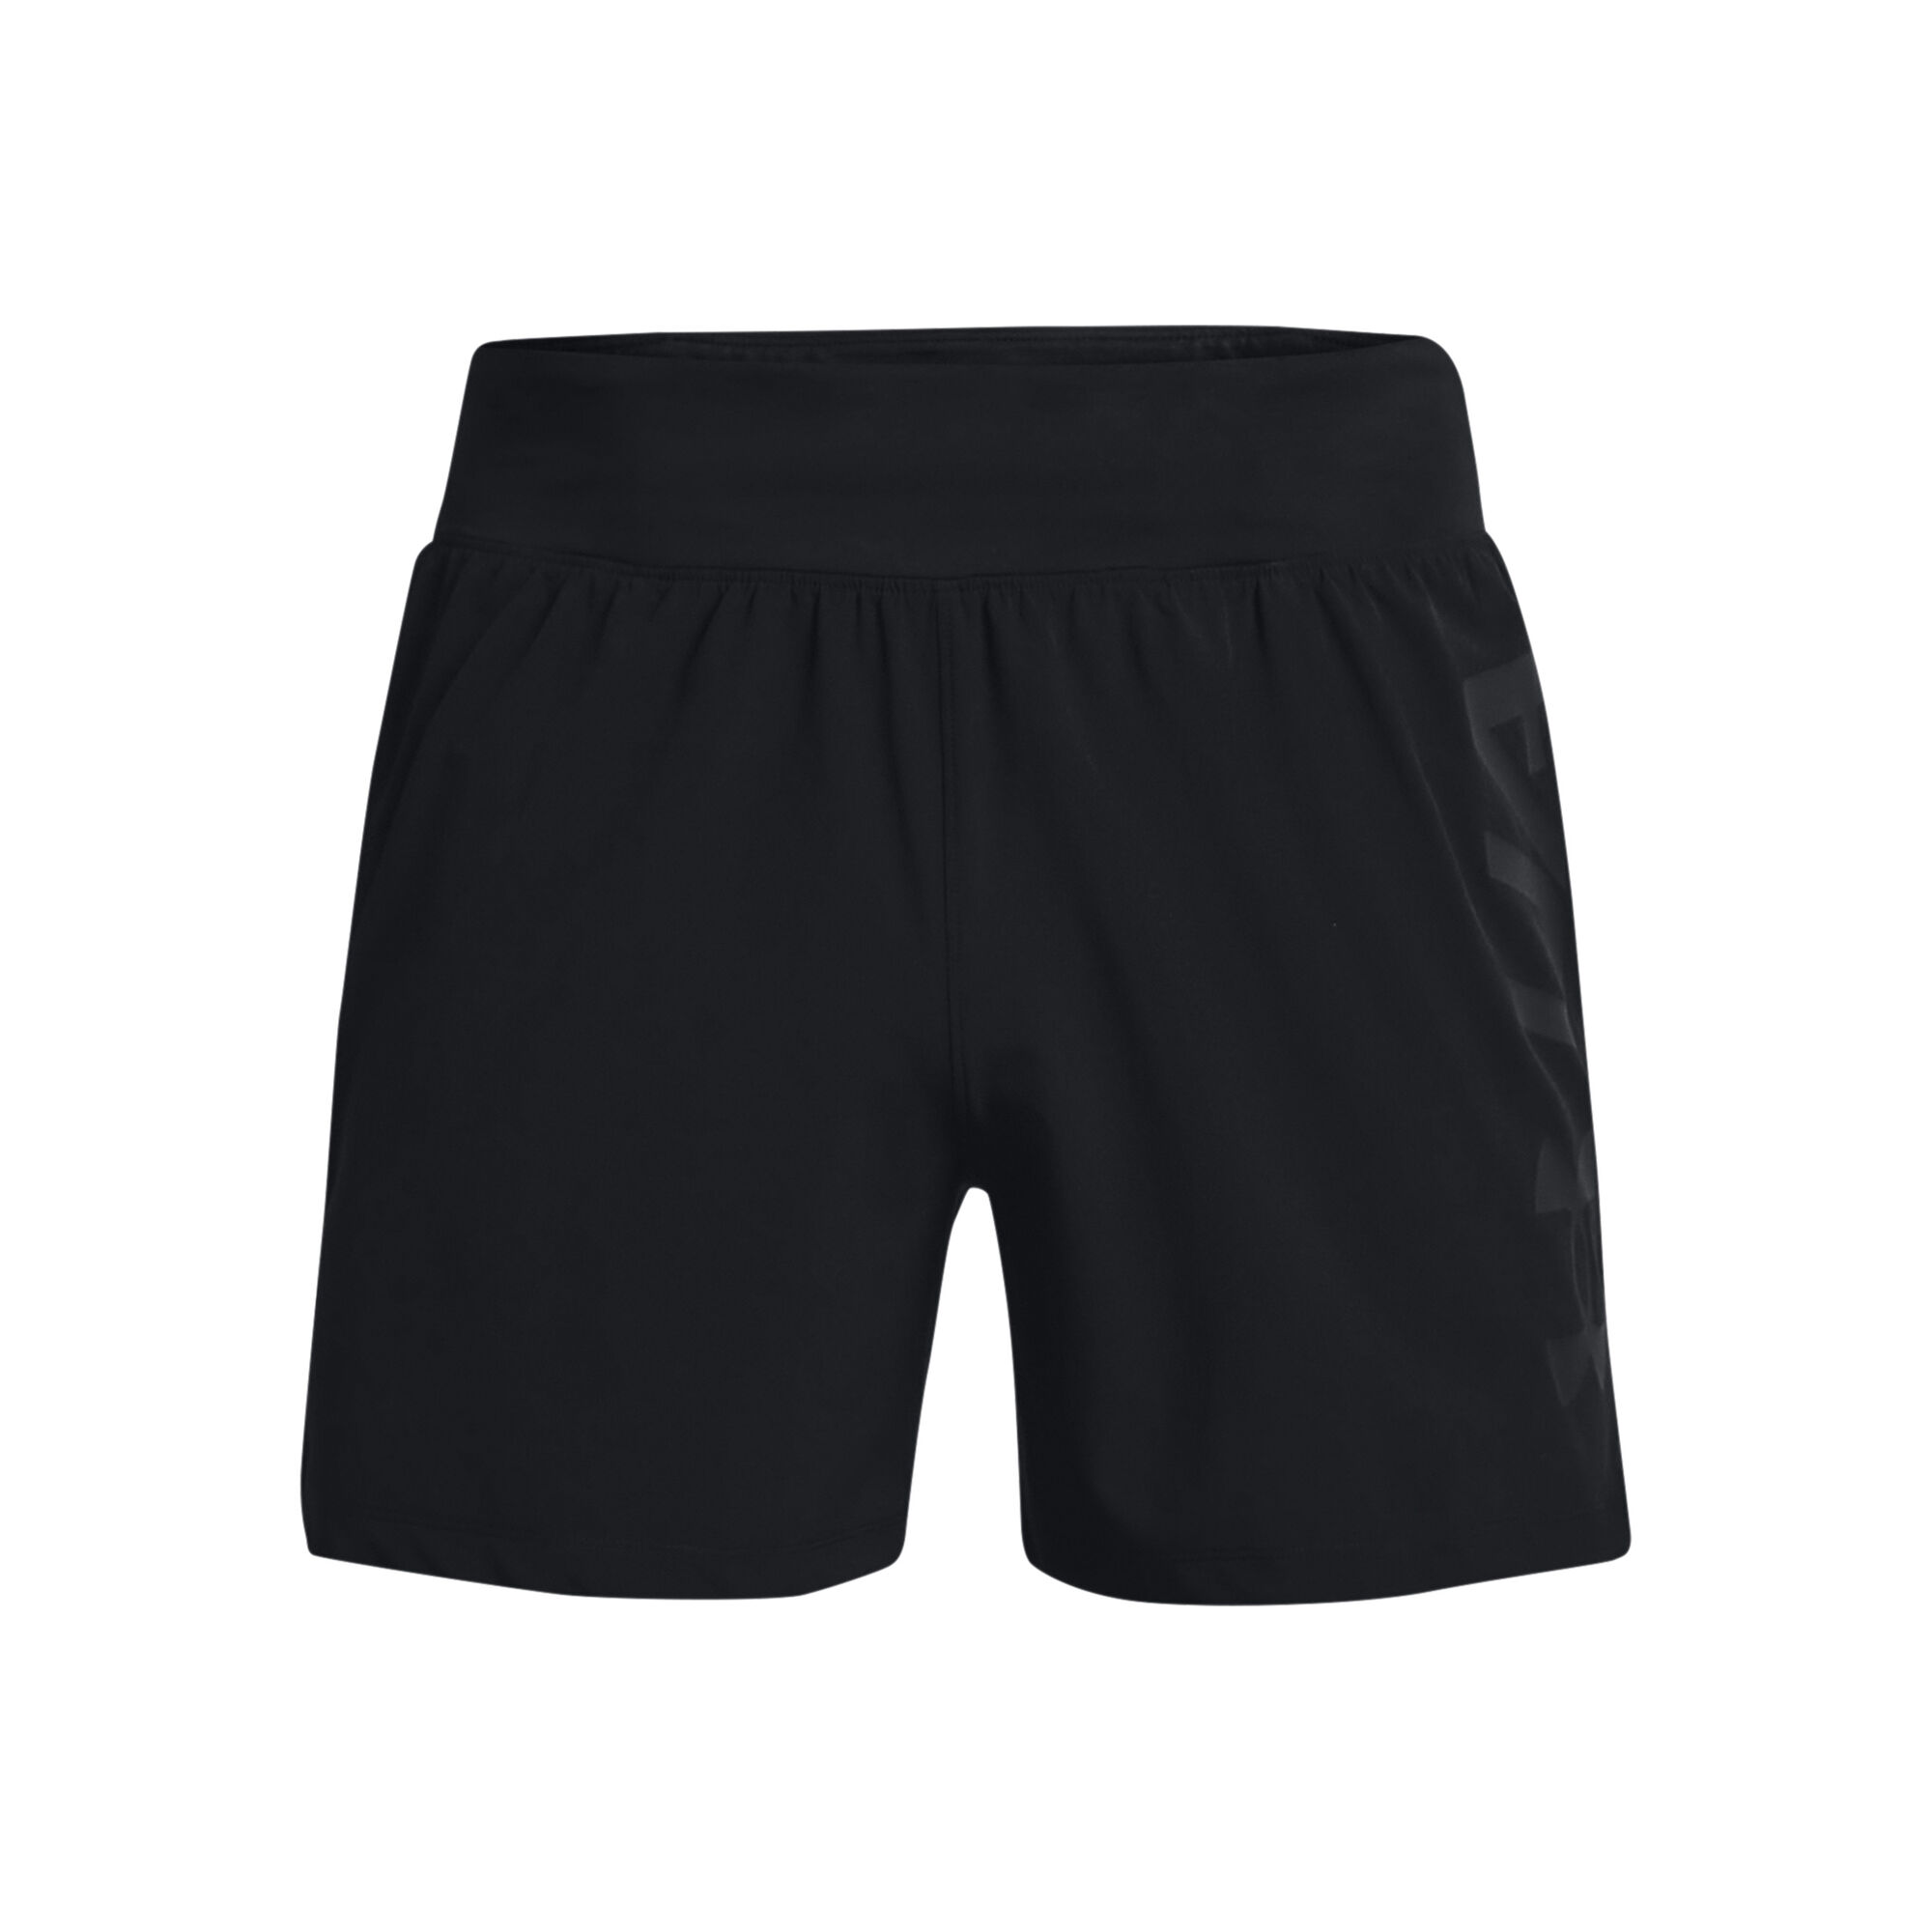 Under Armour Men's Speedpocket 9'' Shorts - Black, Sm